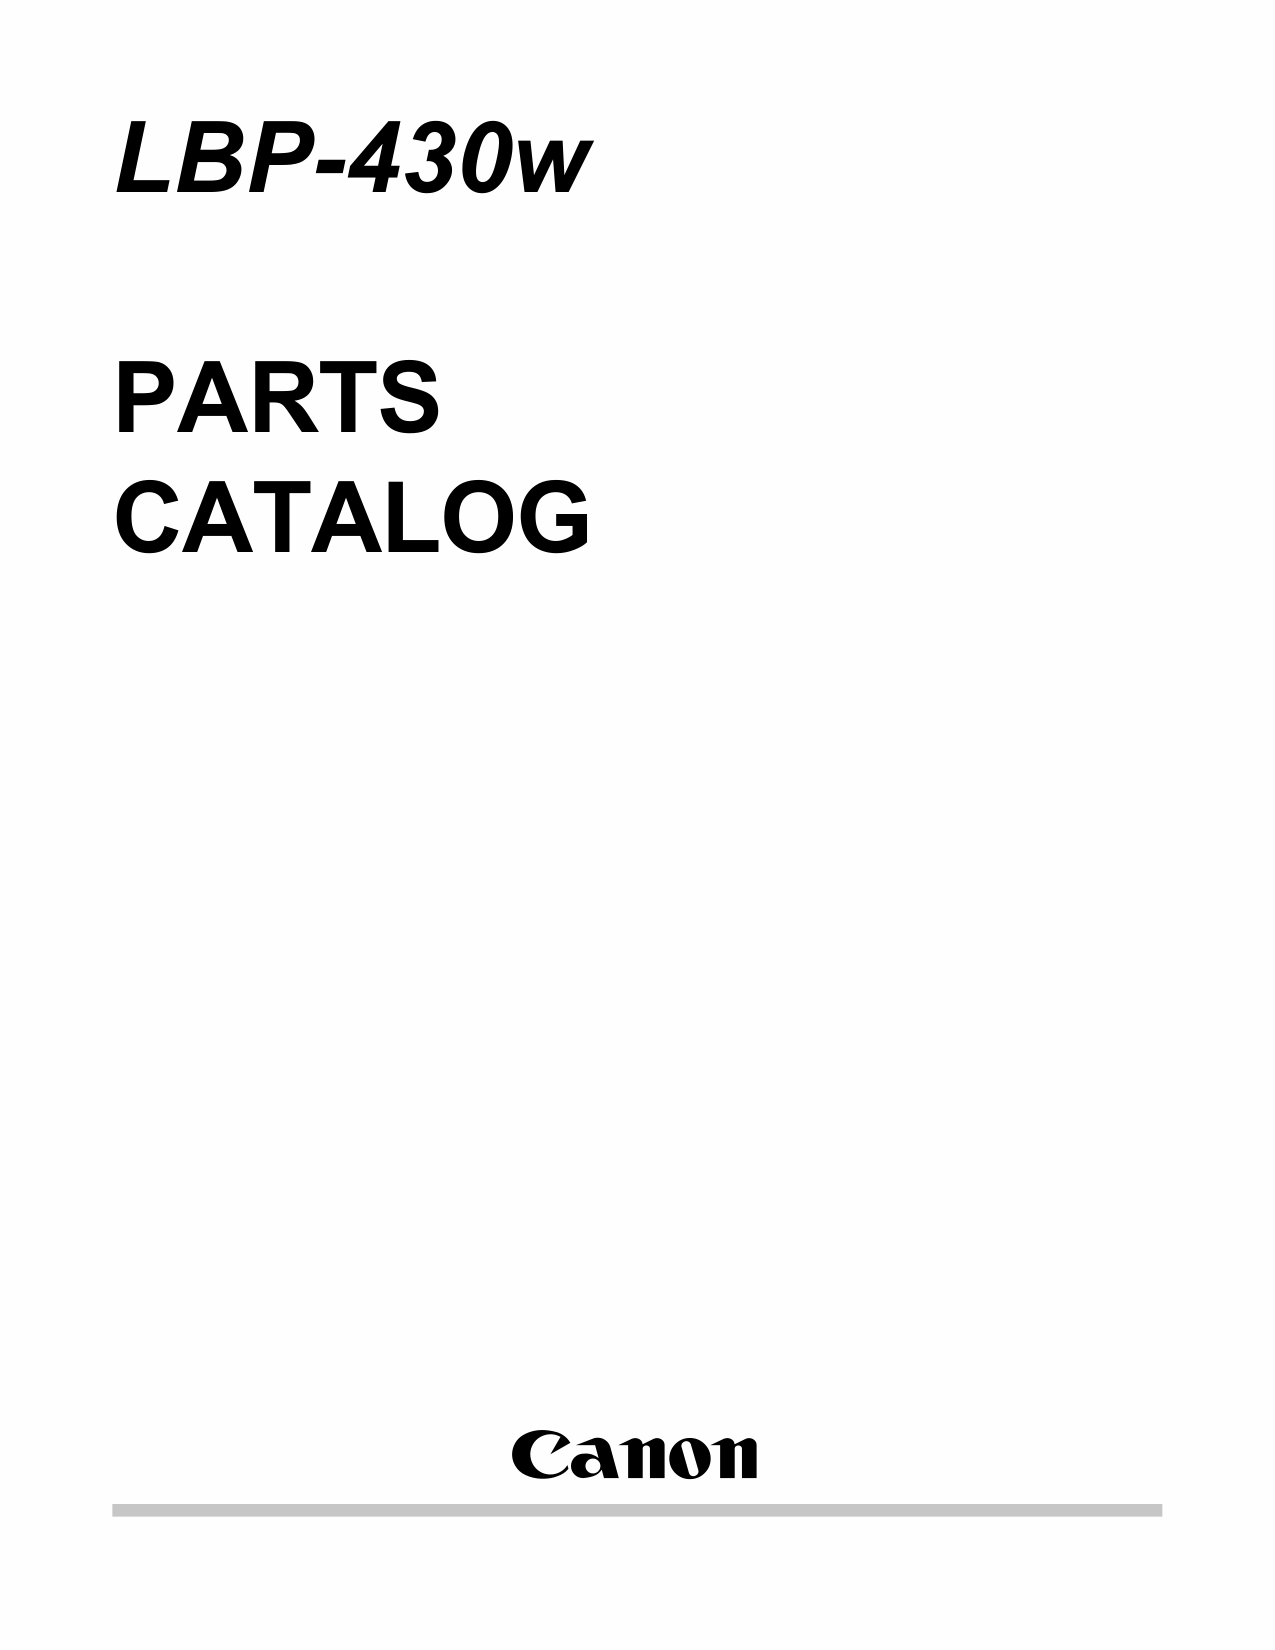 Canon imageCLASS LBP-430w Parts Catalog Manual-1